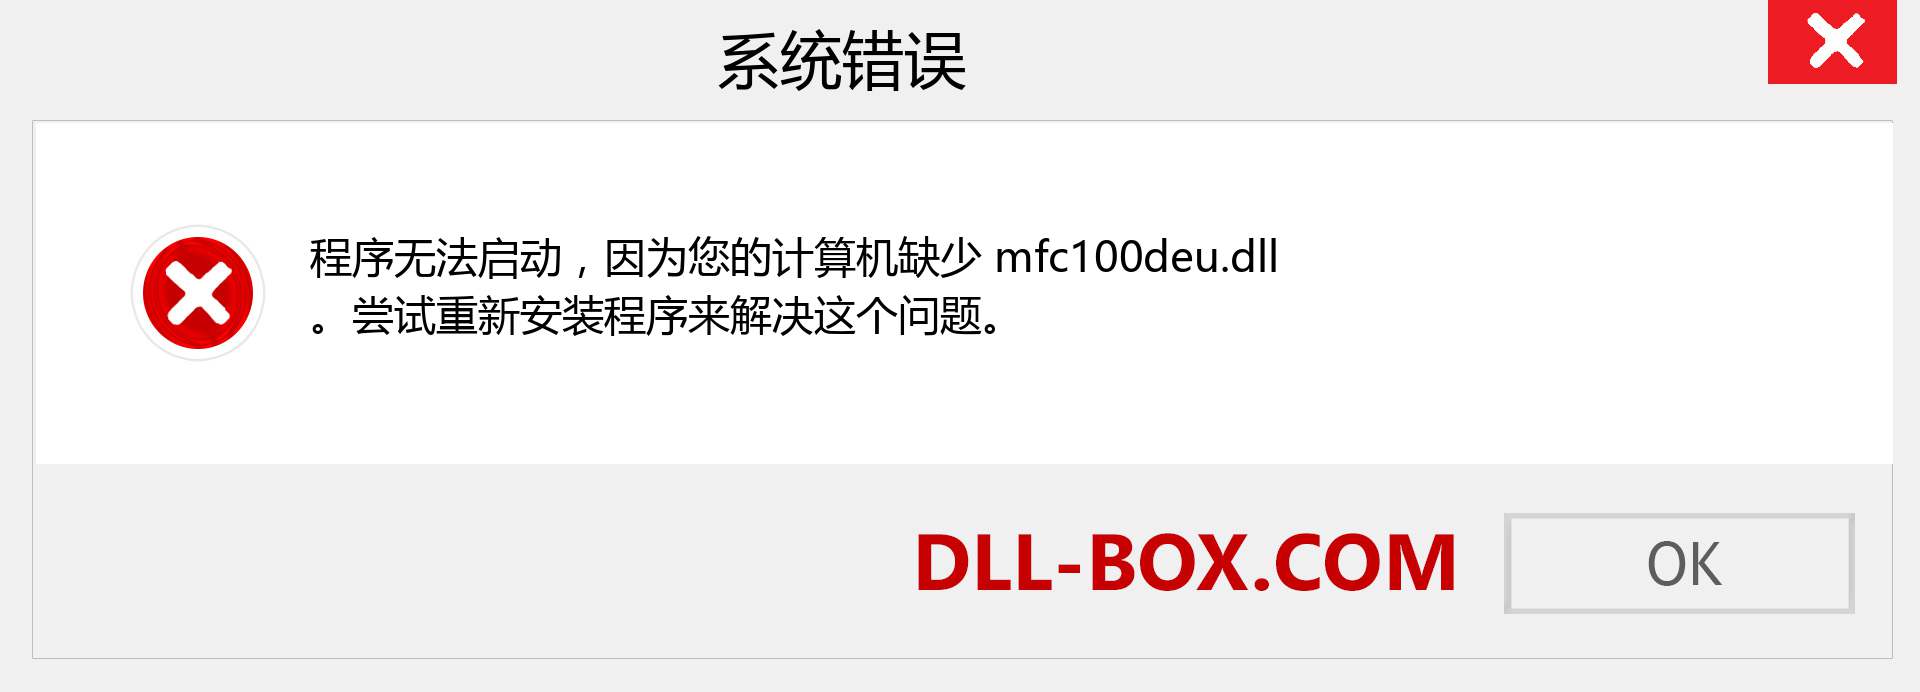 mfc100deu.dll 文件丢失？。 适用于 Windows 7、8、10 的下载 - 修复 Windows、照片、图像上的 mfc100deu dll 丢失错误